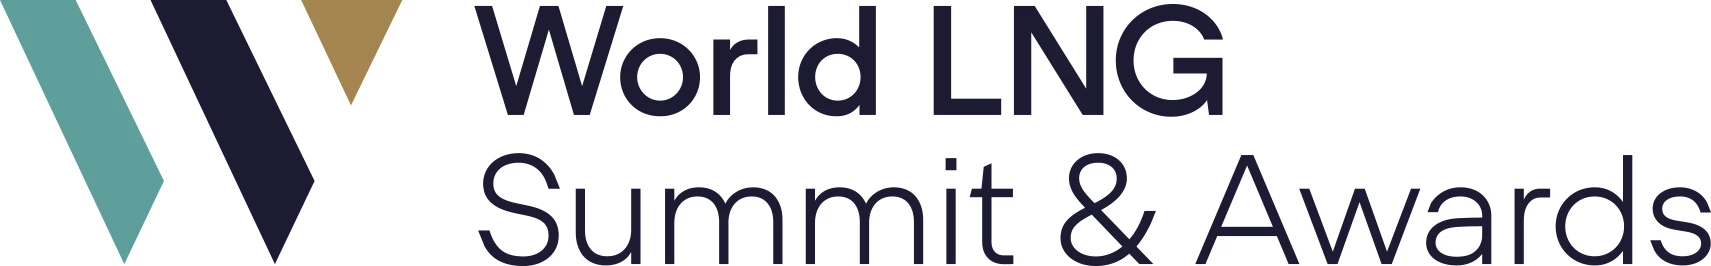 WORLD LNG SUMMIT & AWARDS